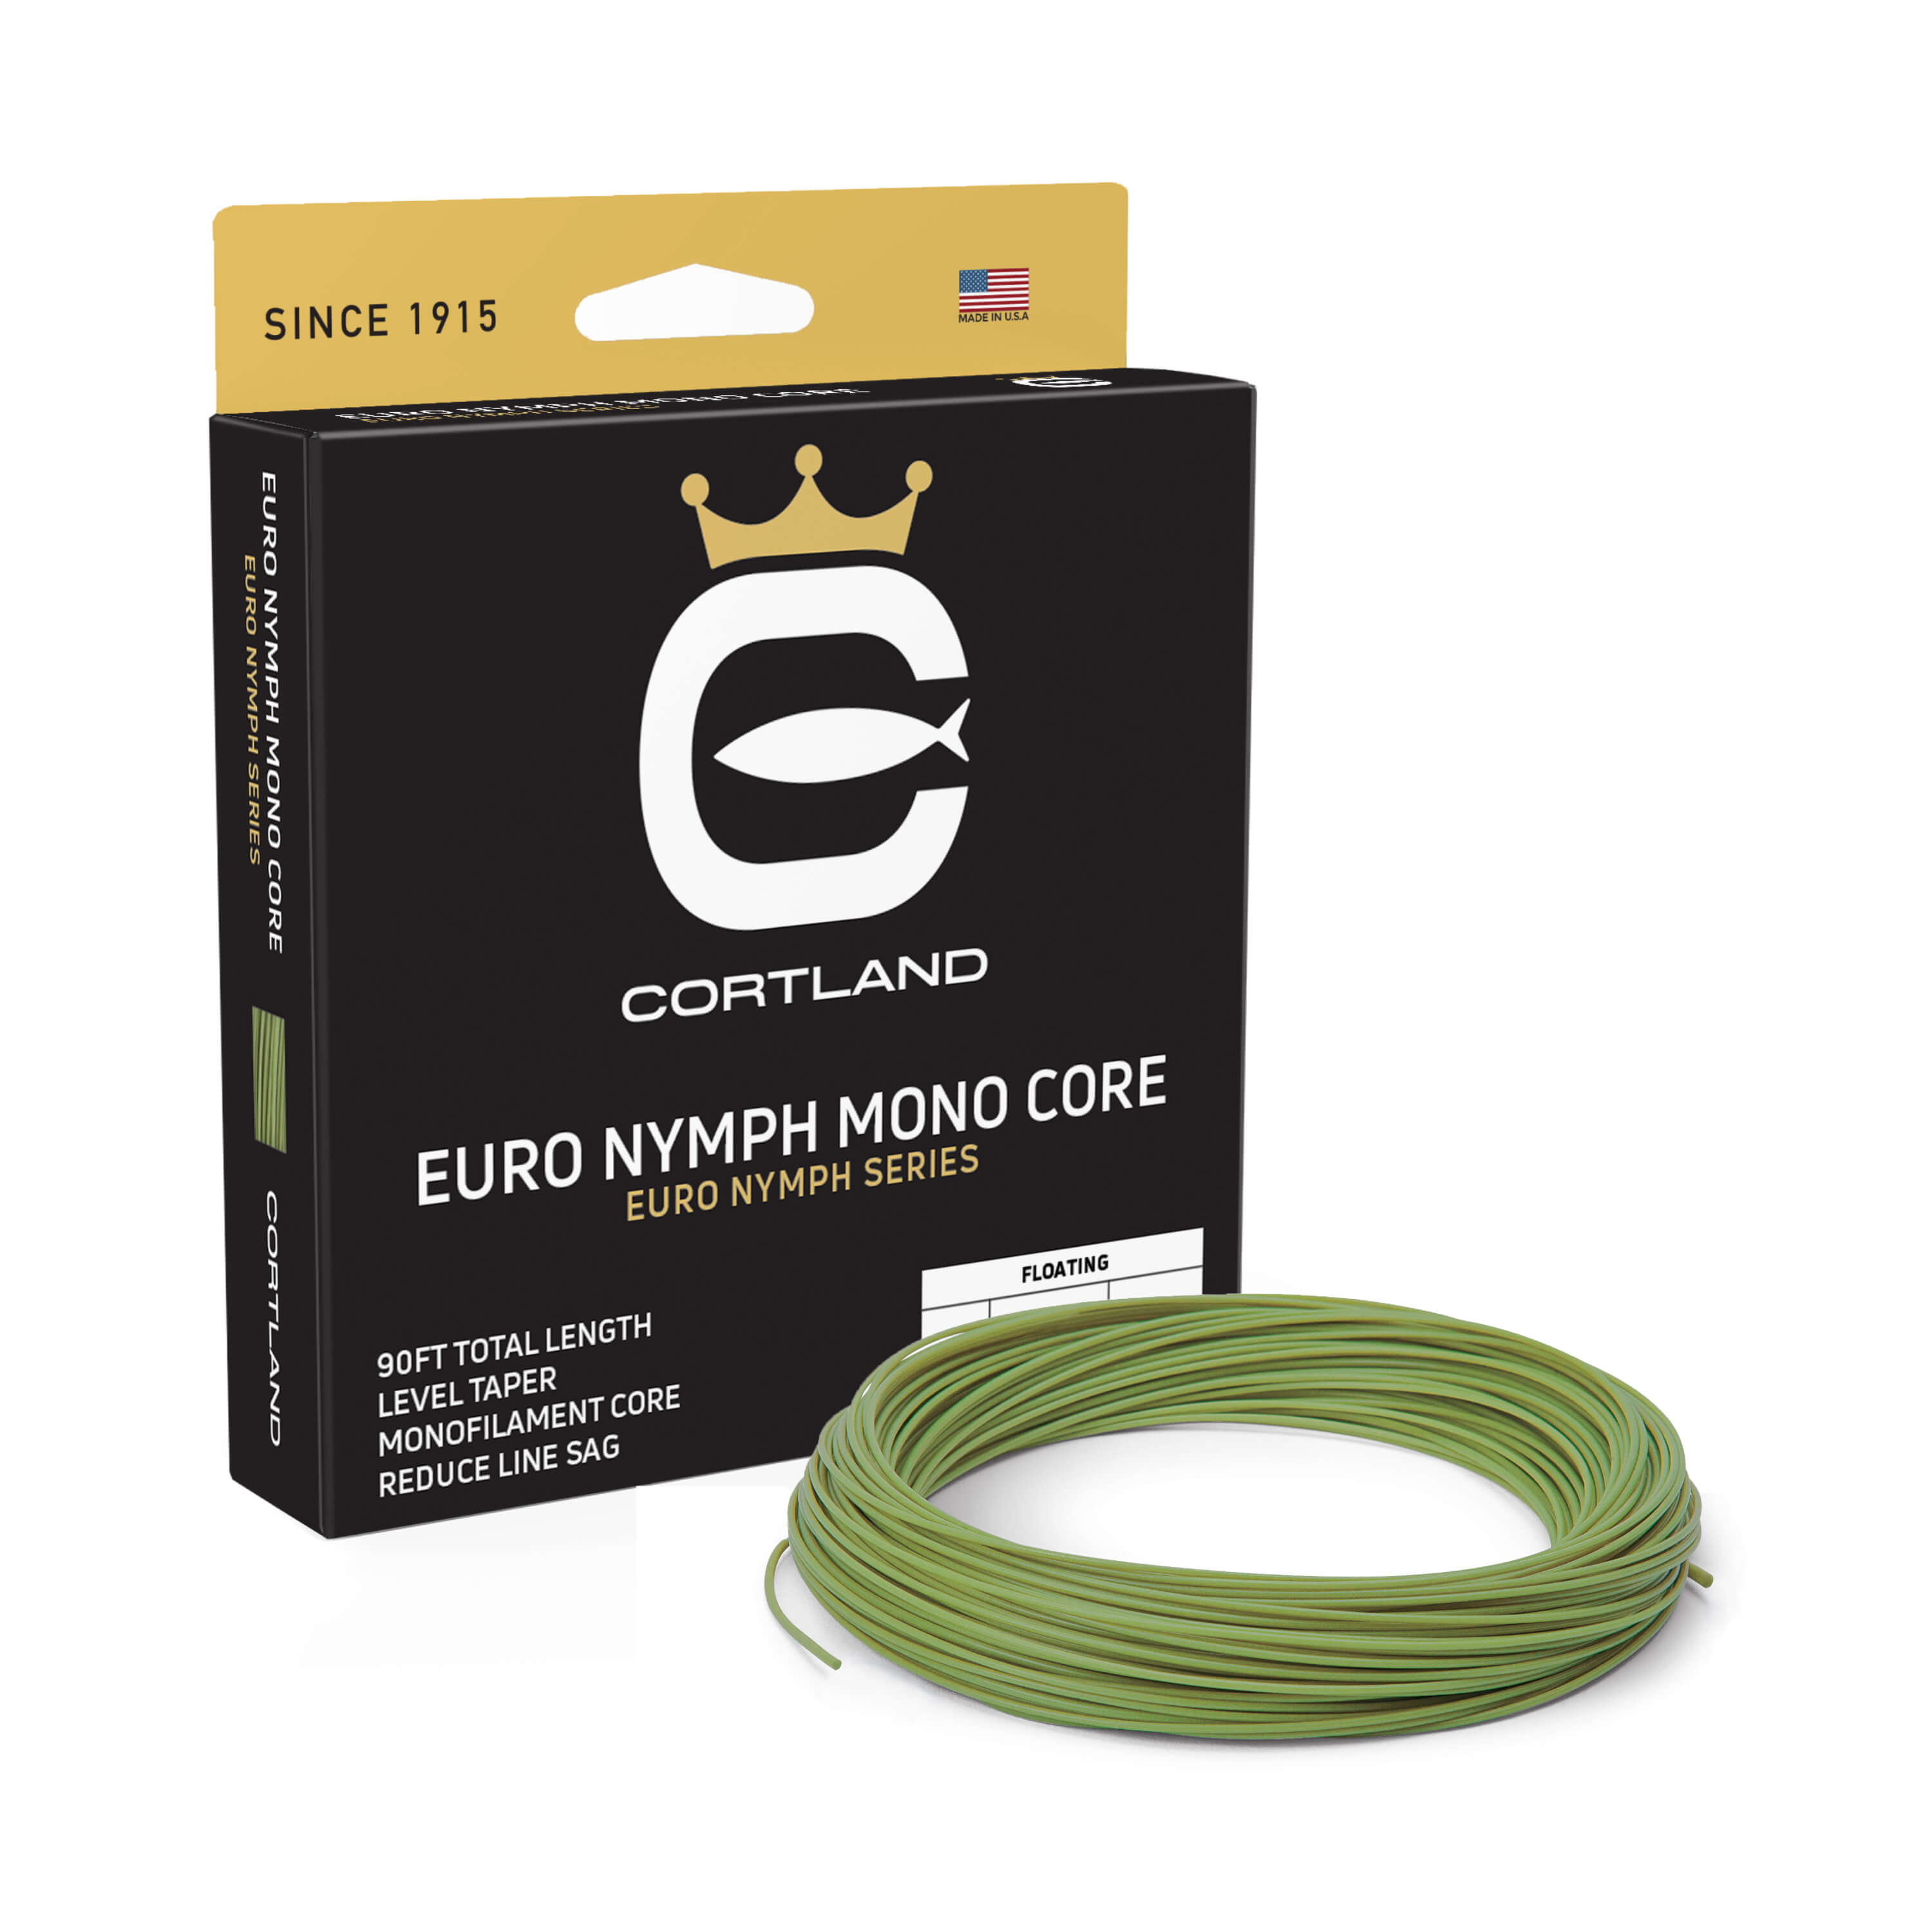 Cortland Euro Nymph Mono Core Line .017 / Level